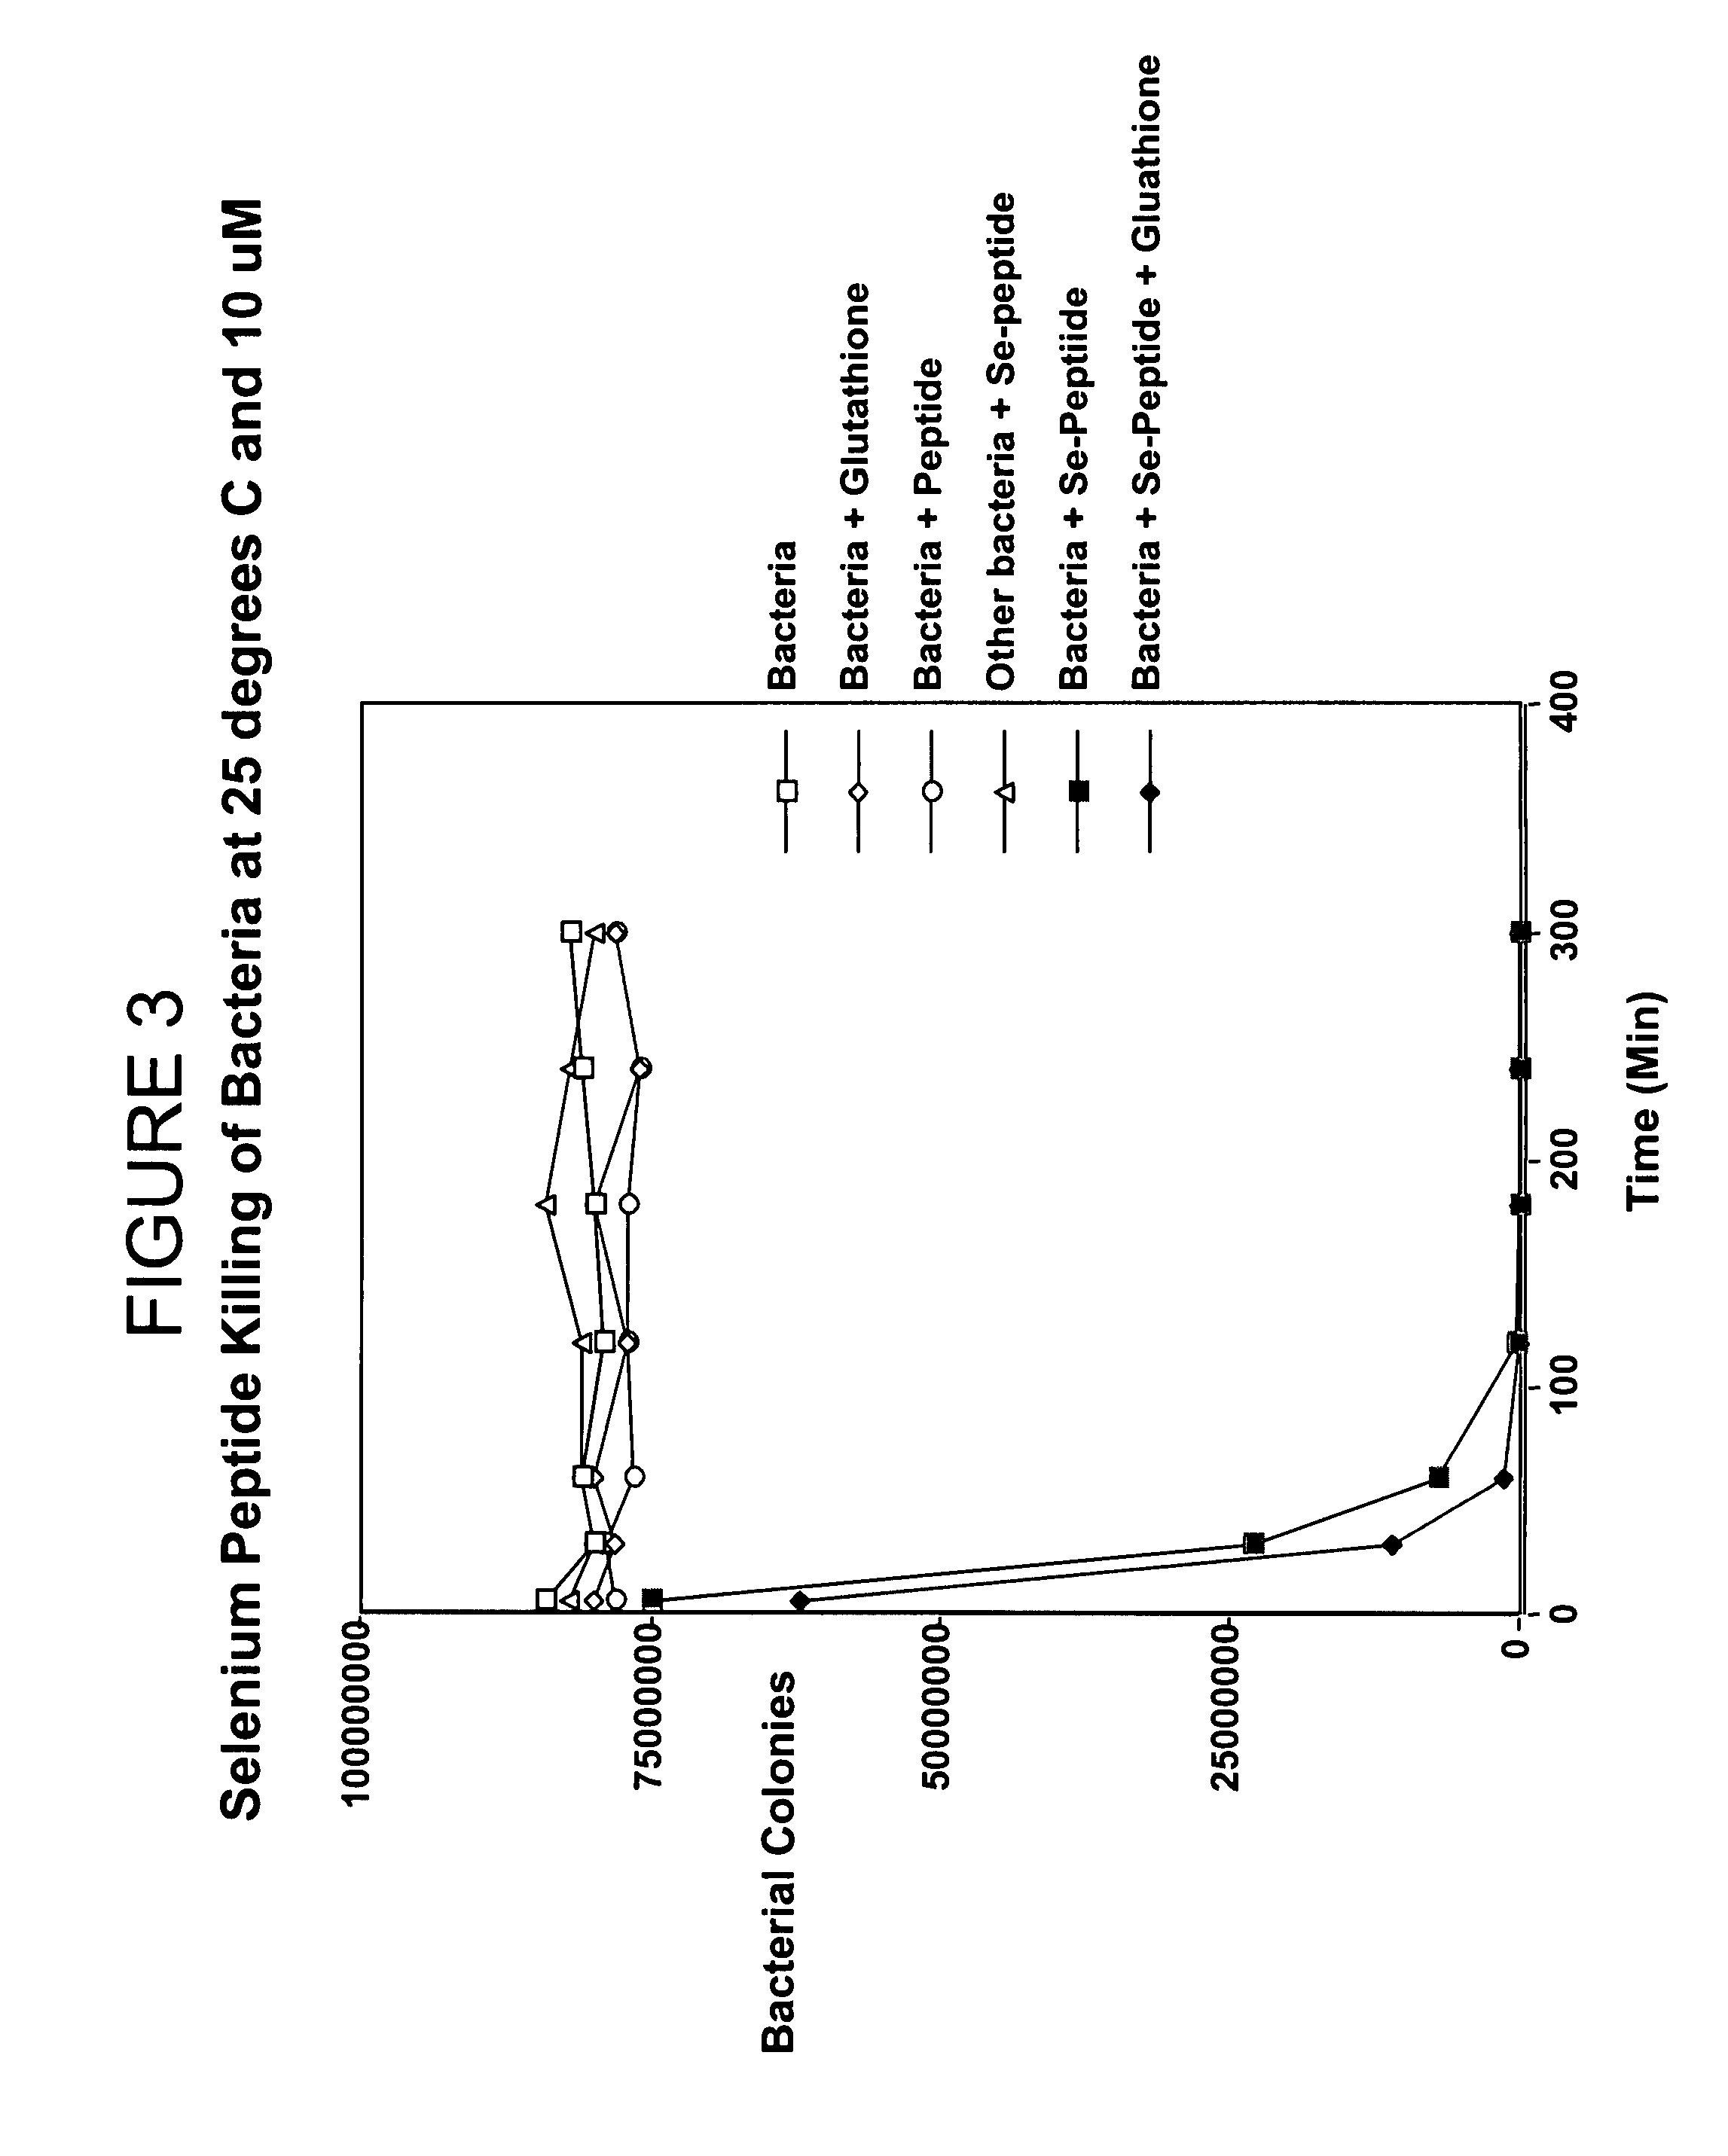 Selenium-based biocidal formulations and methods of use thereof